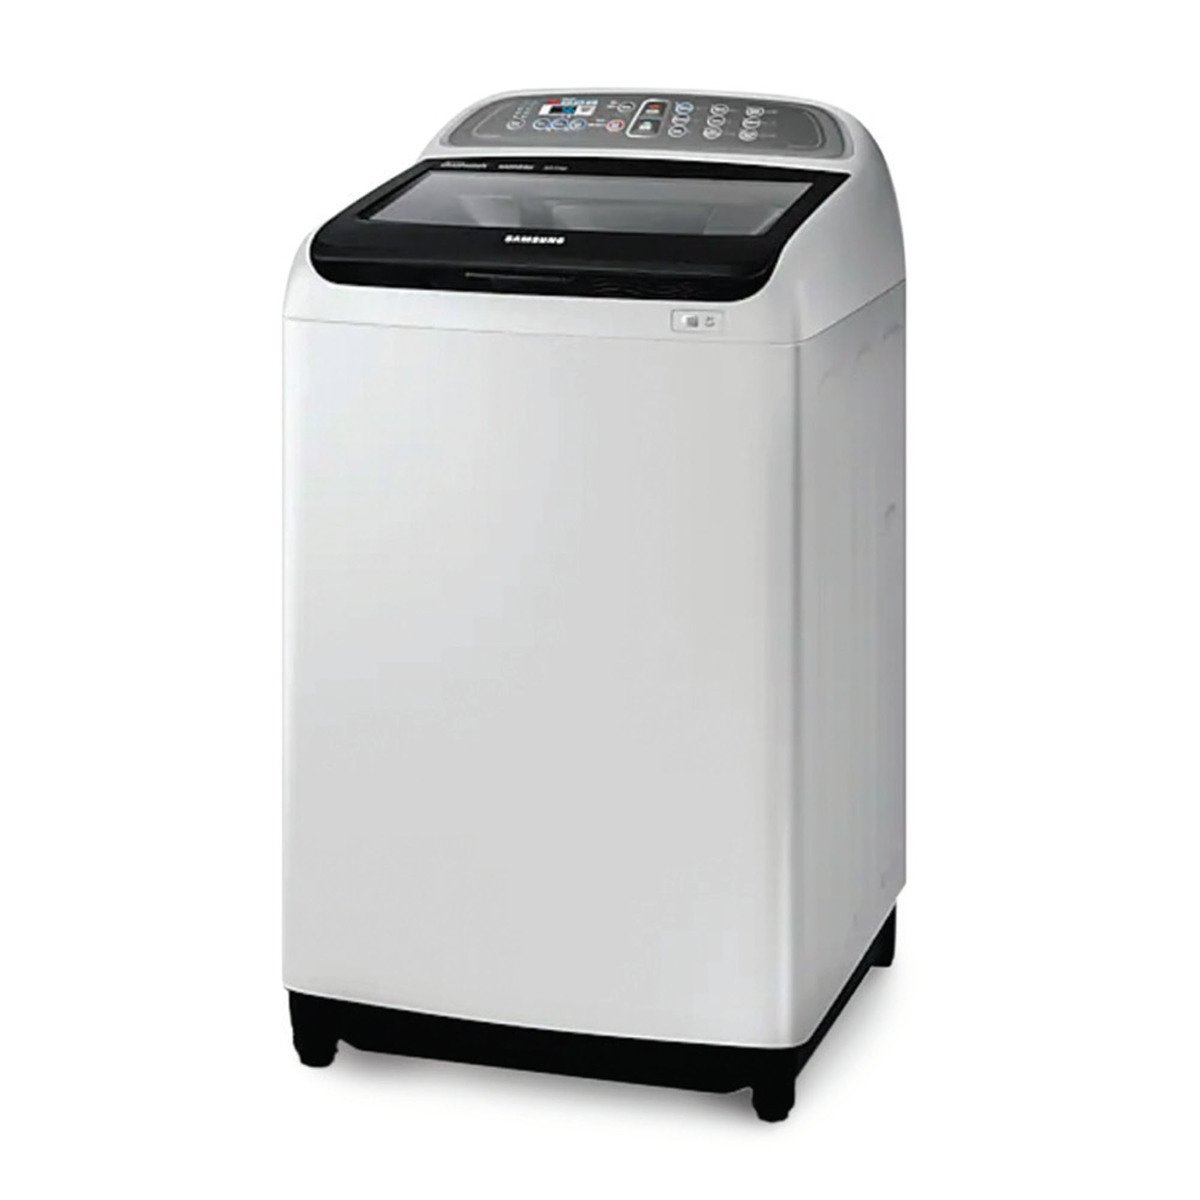 Samsung Top Load Washing Machine WA10J5730SG/GU 10.5Kg